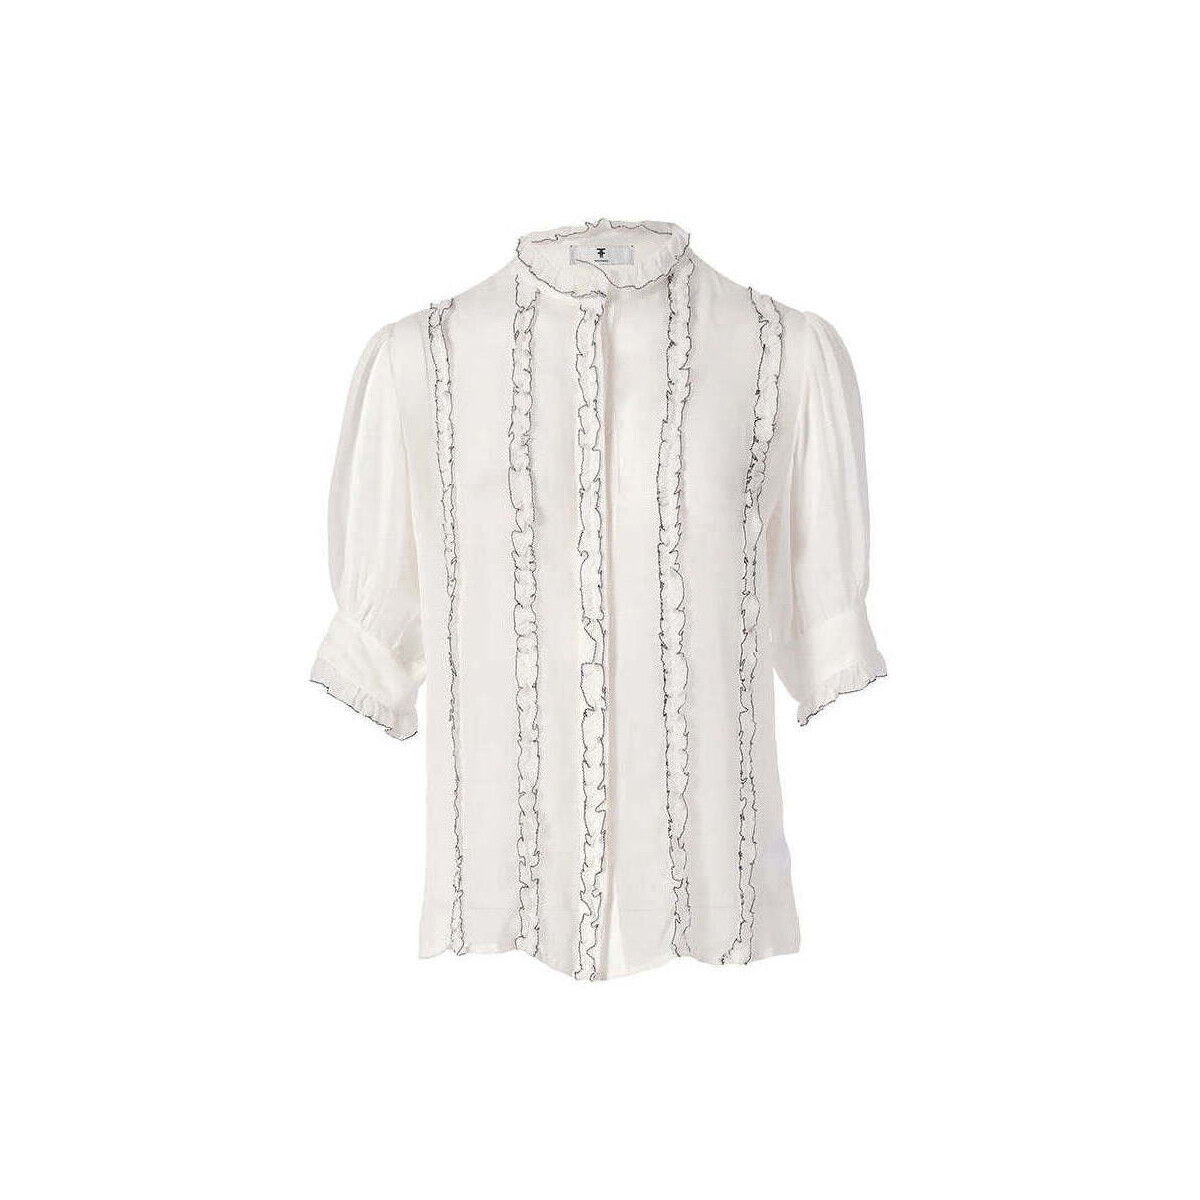 Textil Mulher camisas Fracomina FR24ST6012W42801-108-1-1 Branco